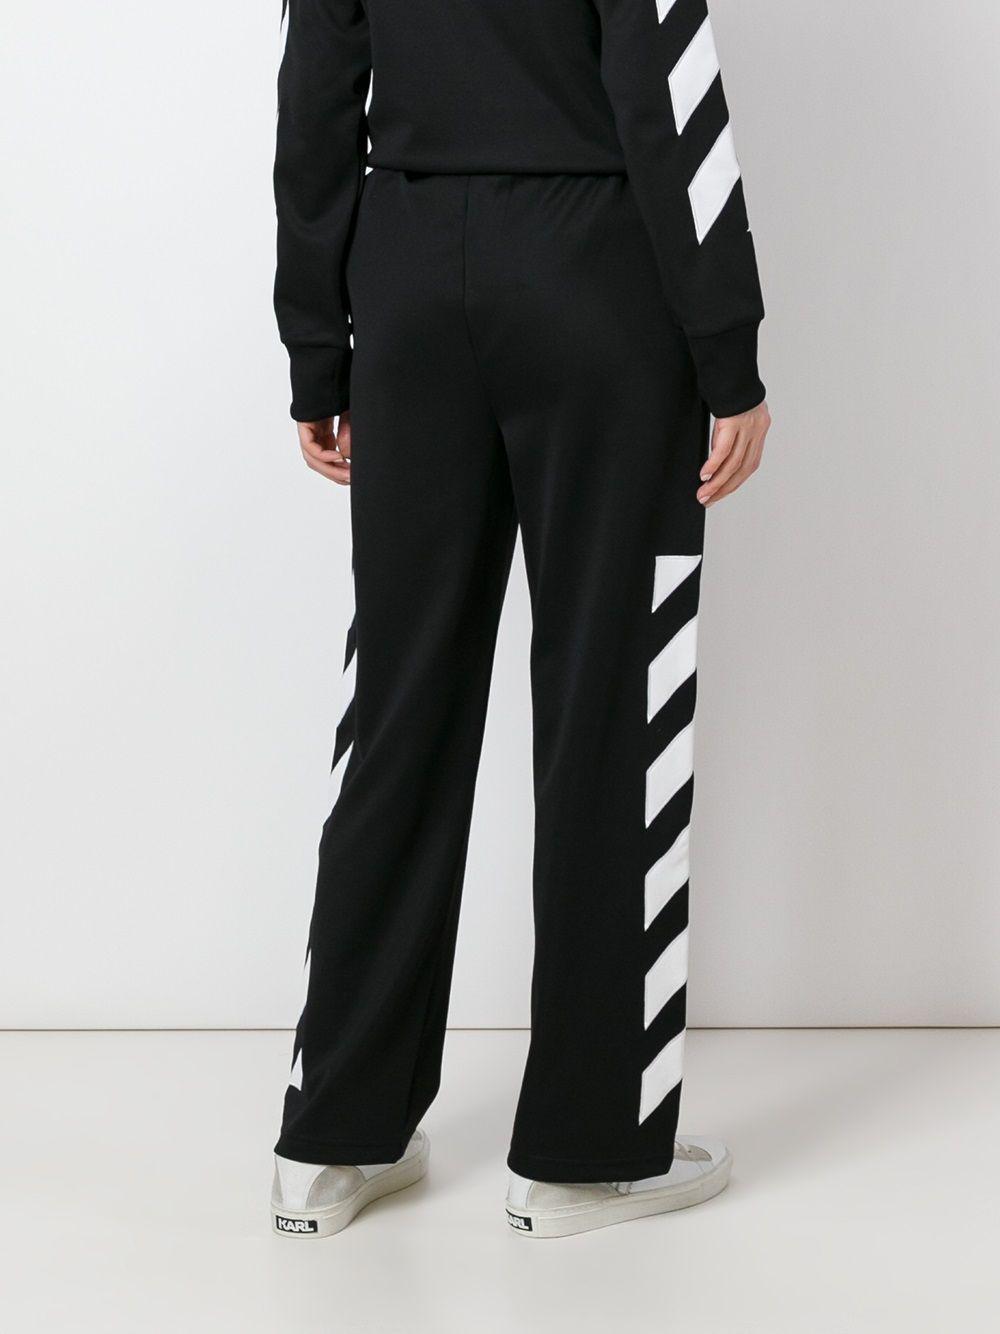 Off-White c/o Virgil Abloh Side Stripes Track Pants in Black - Lyst